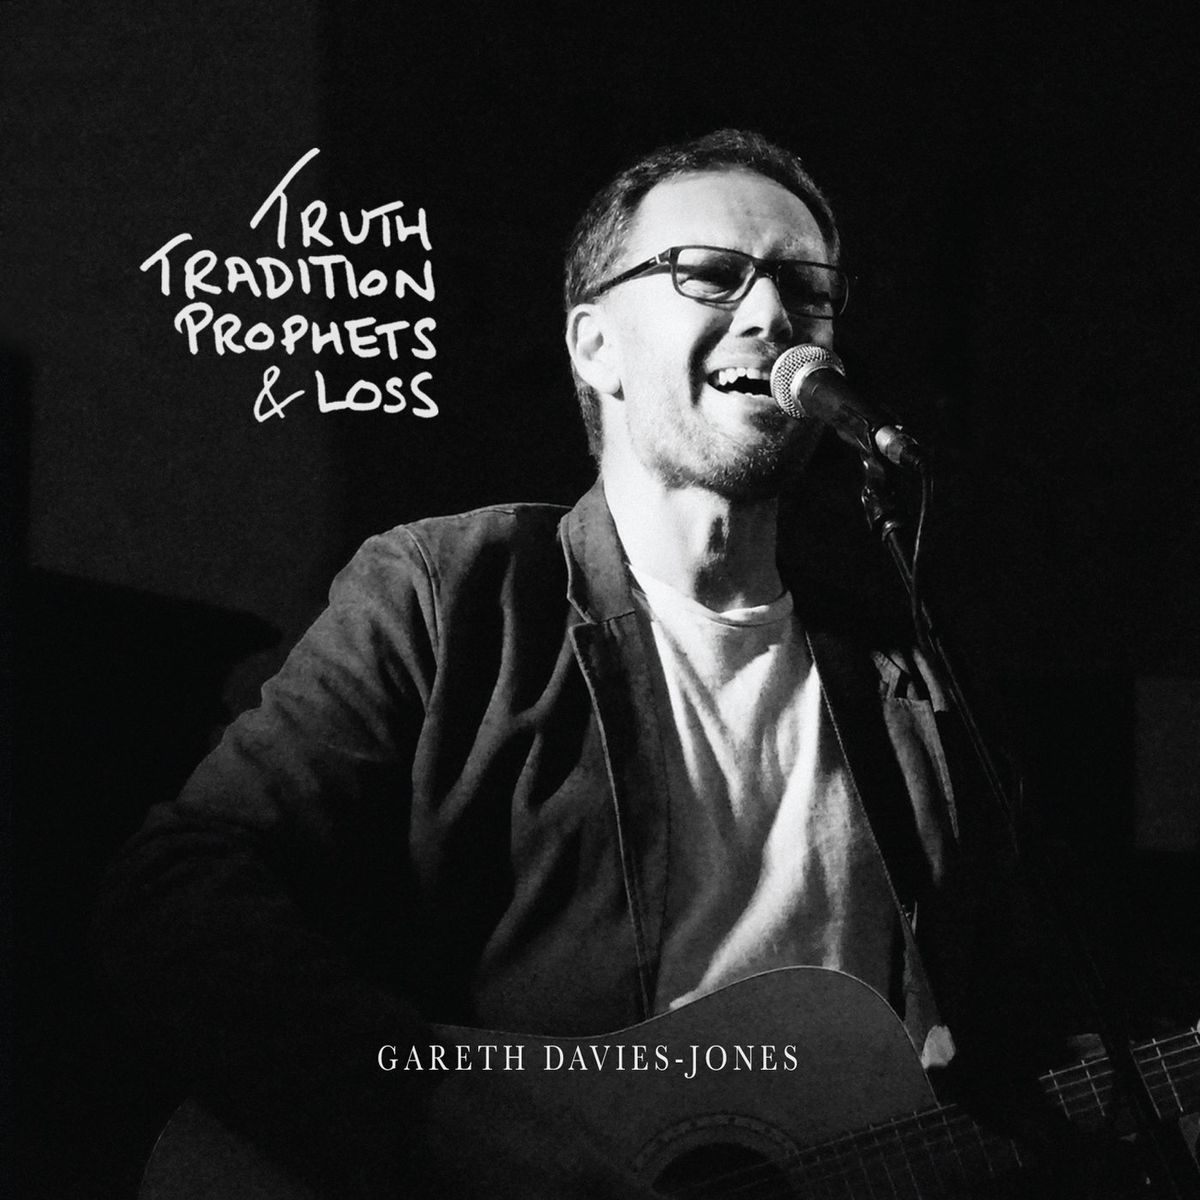 Gareth Davies-Jones - 2021 - Truth, Tradition, Prophets & Loss